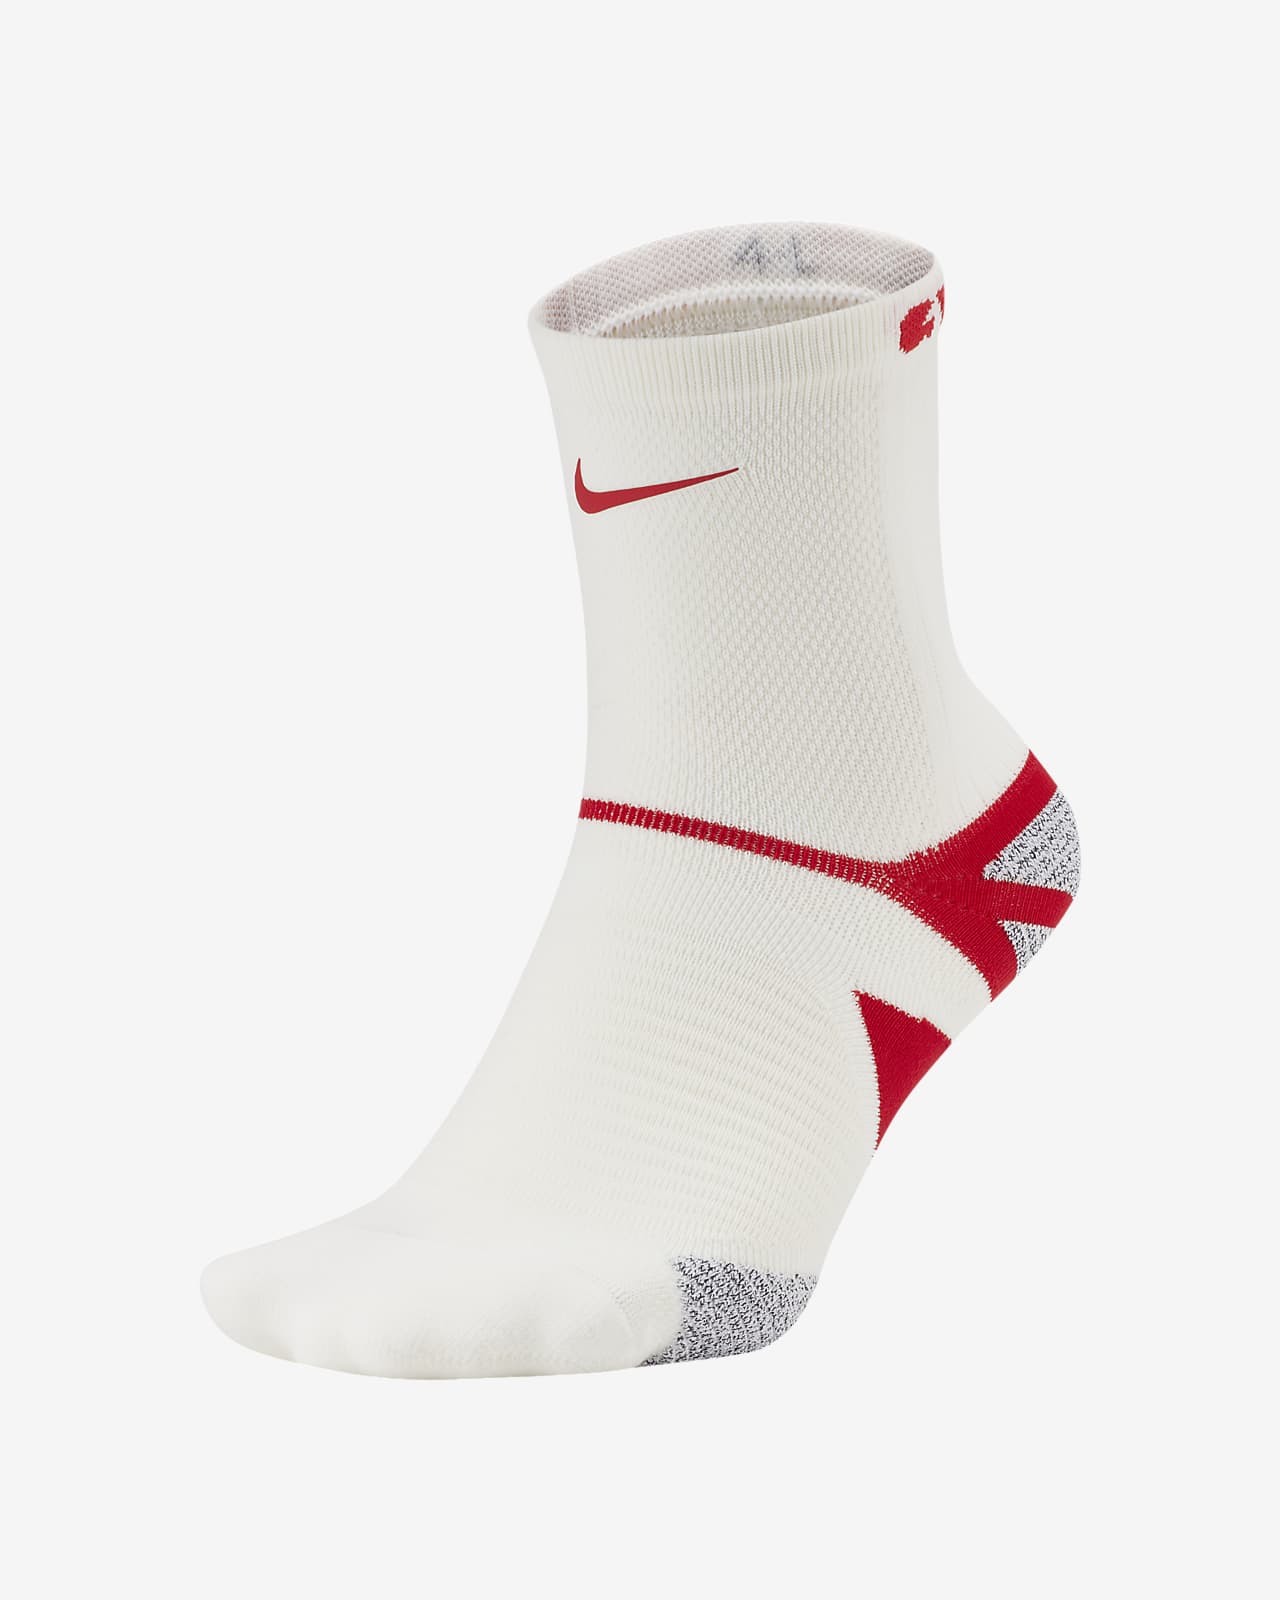 Nike x Gyakusou Ankle Racing Socks